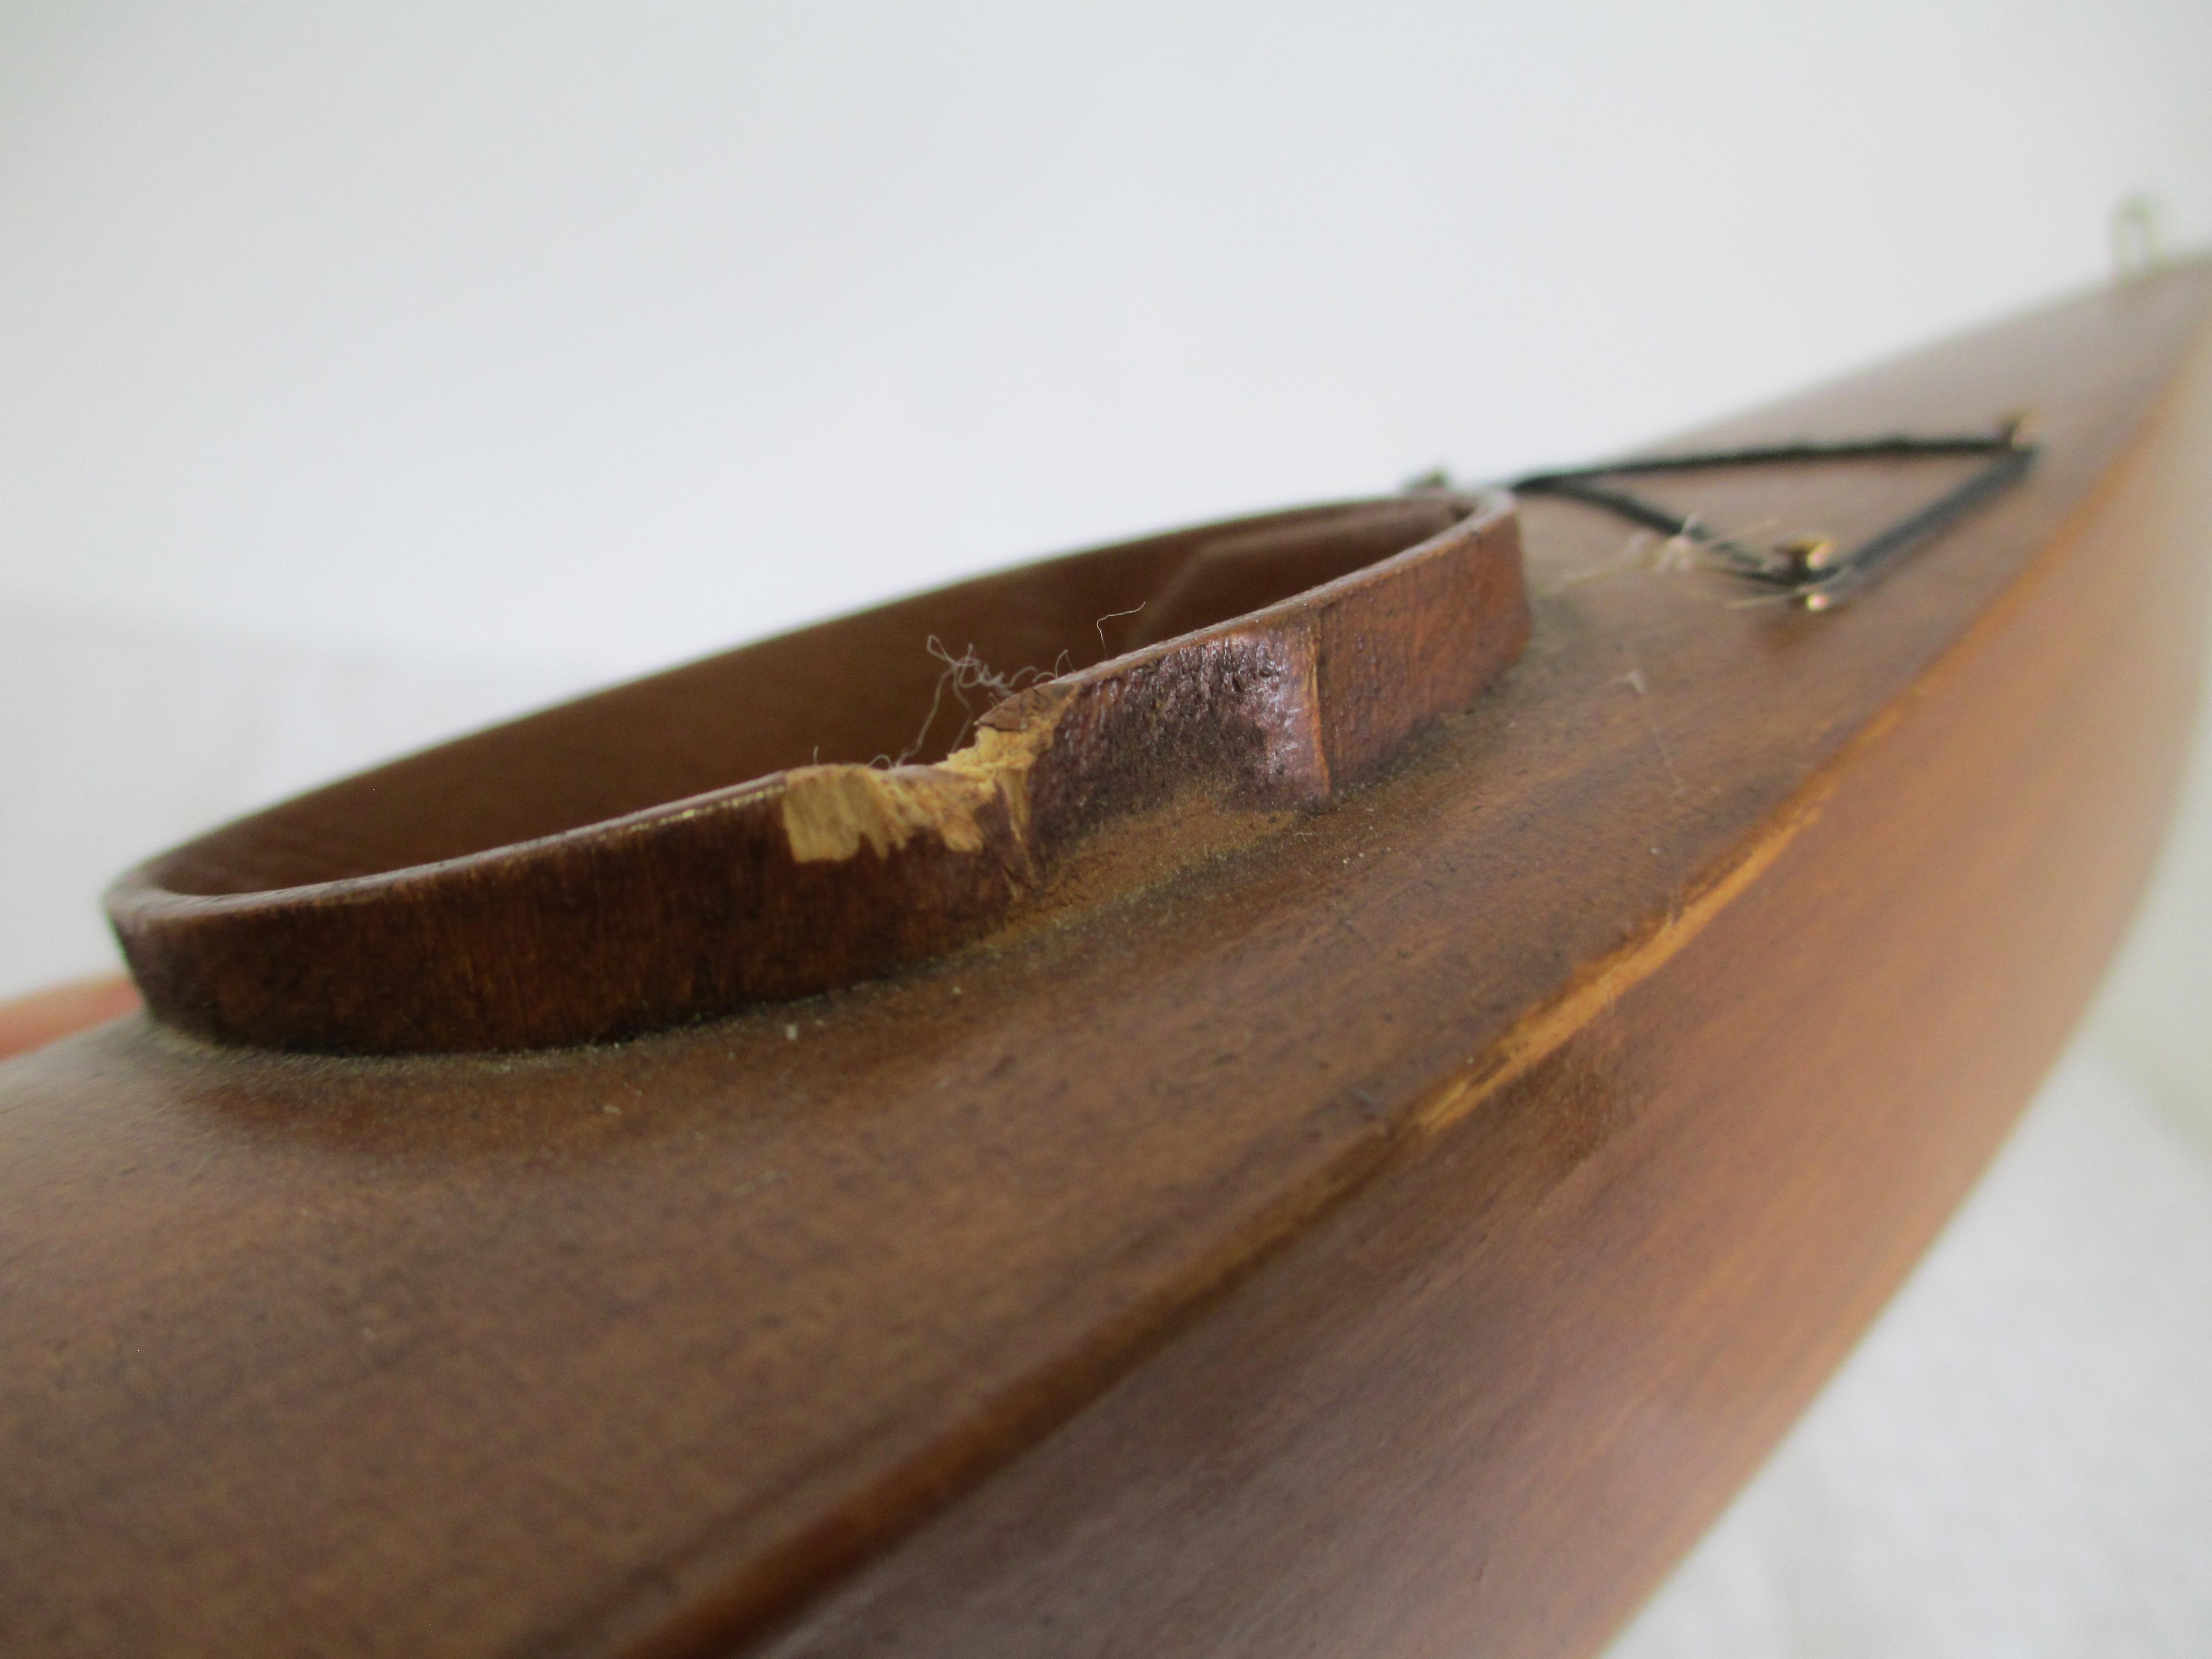 16 inch Handmade Wooden Two-Man Kayak